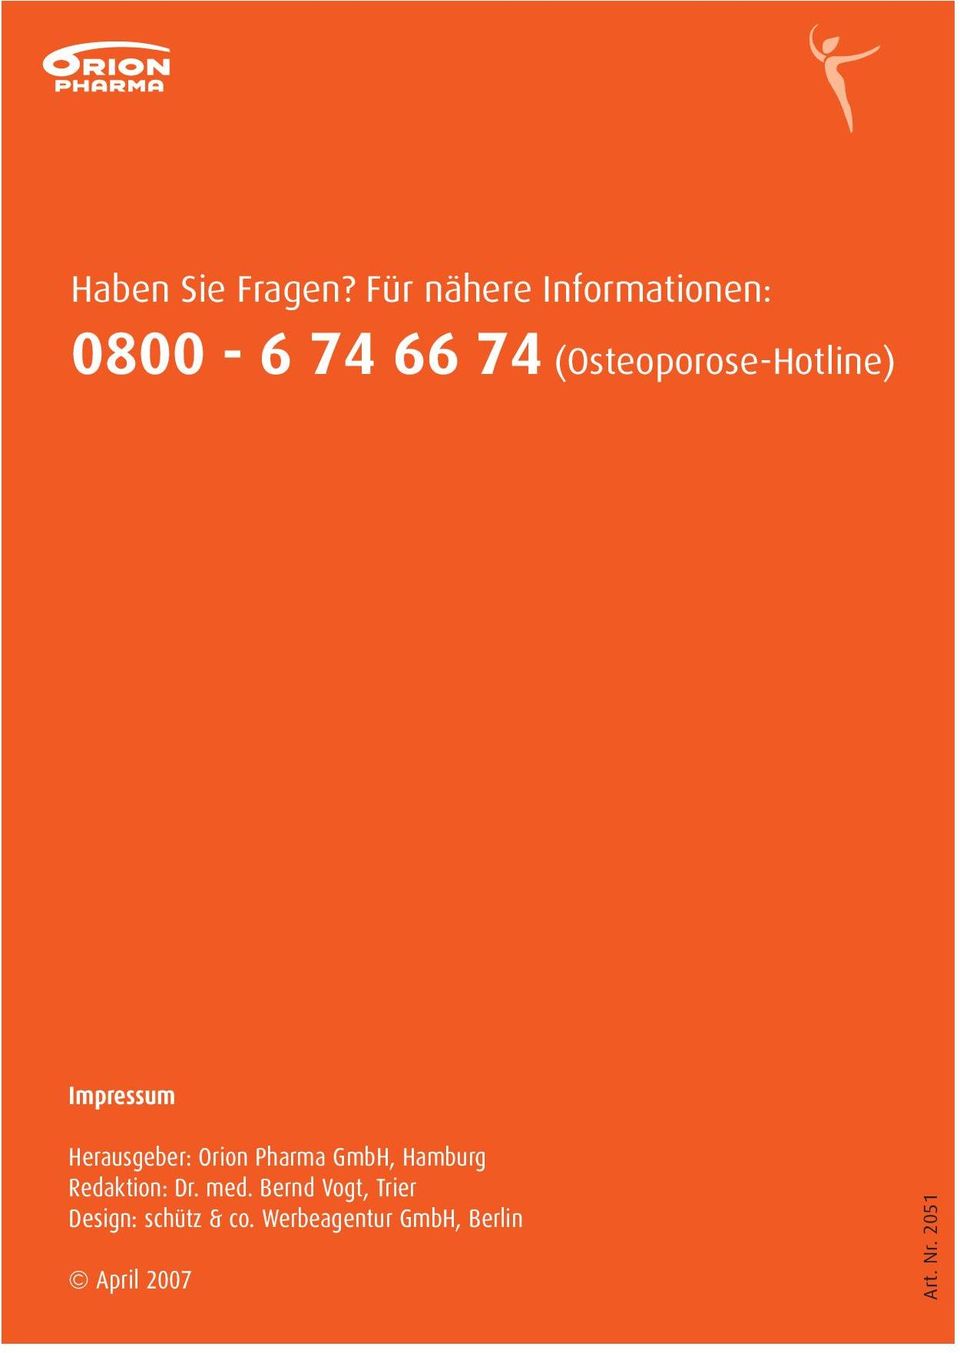 (Osteoporose-Hotline) Impressum Herausgeber: Orion Pharma